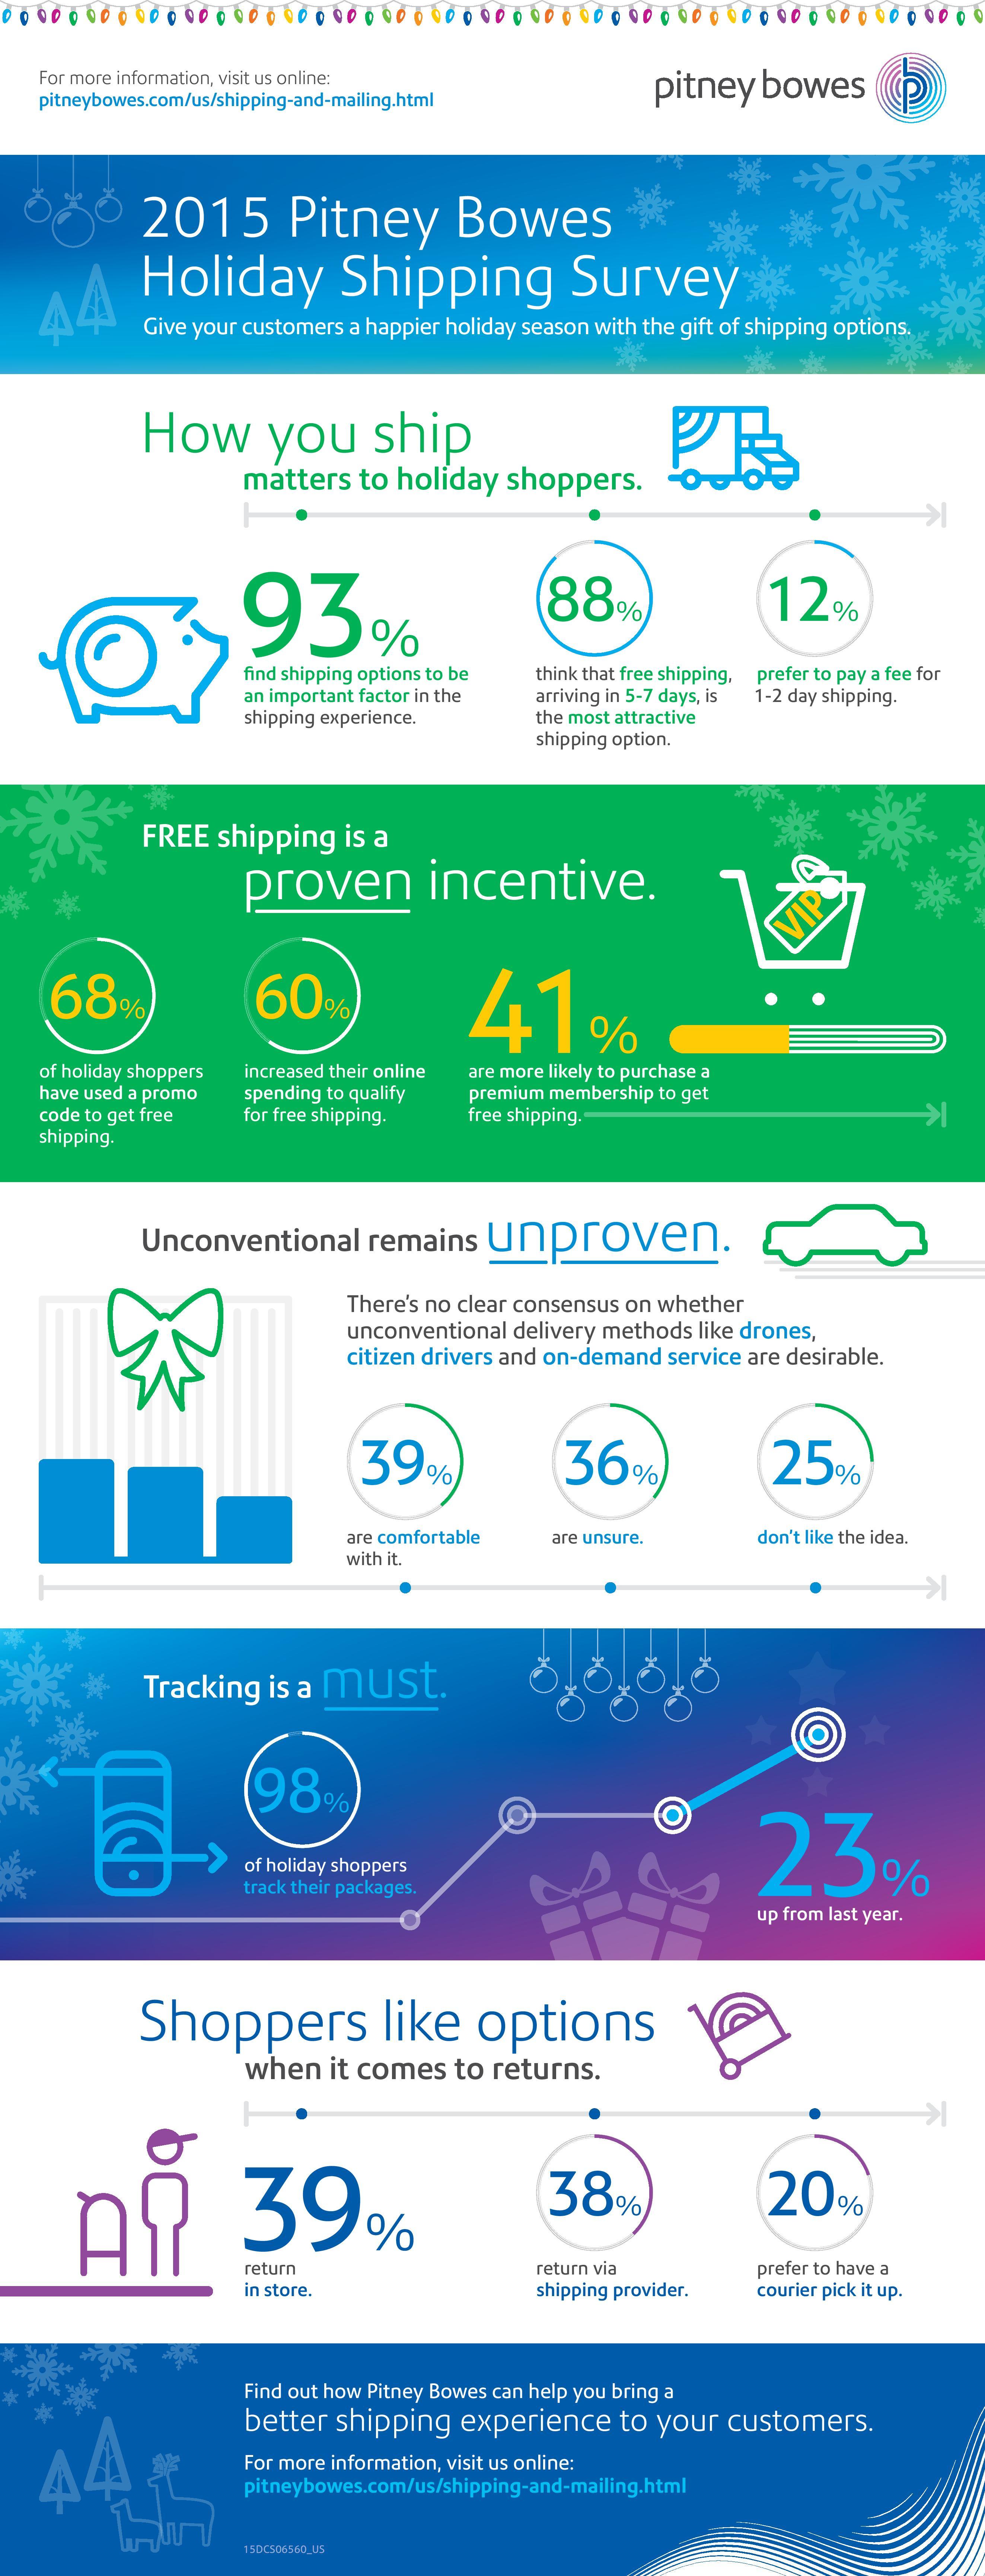 https://mms.businesswire.com/media/20150917005124/en/486300/5/2347294_2015_Holiday_Shipping_Survey_Infographic_final.jpg